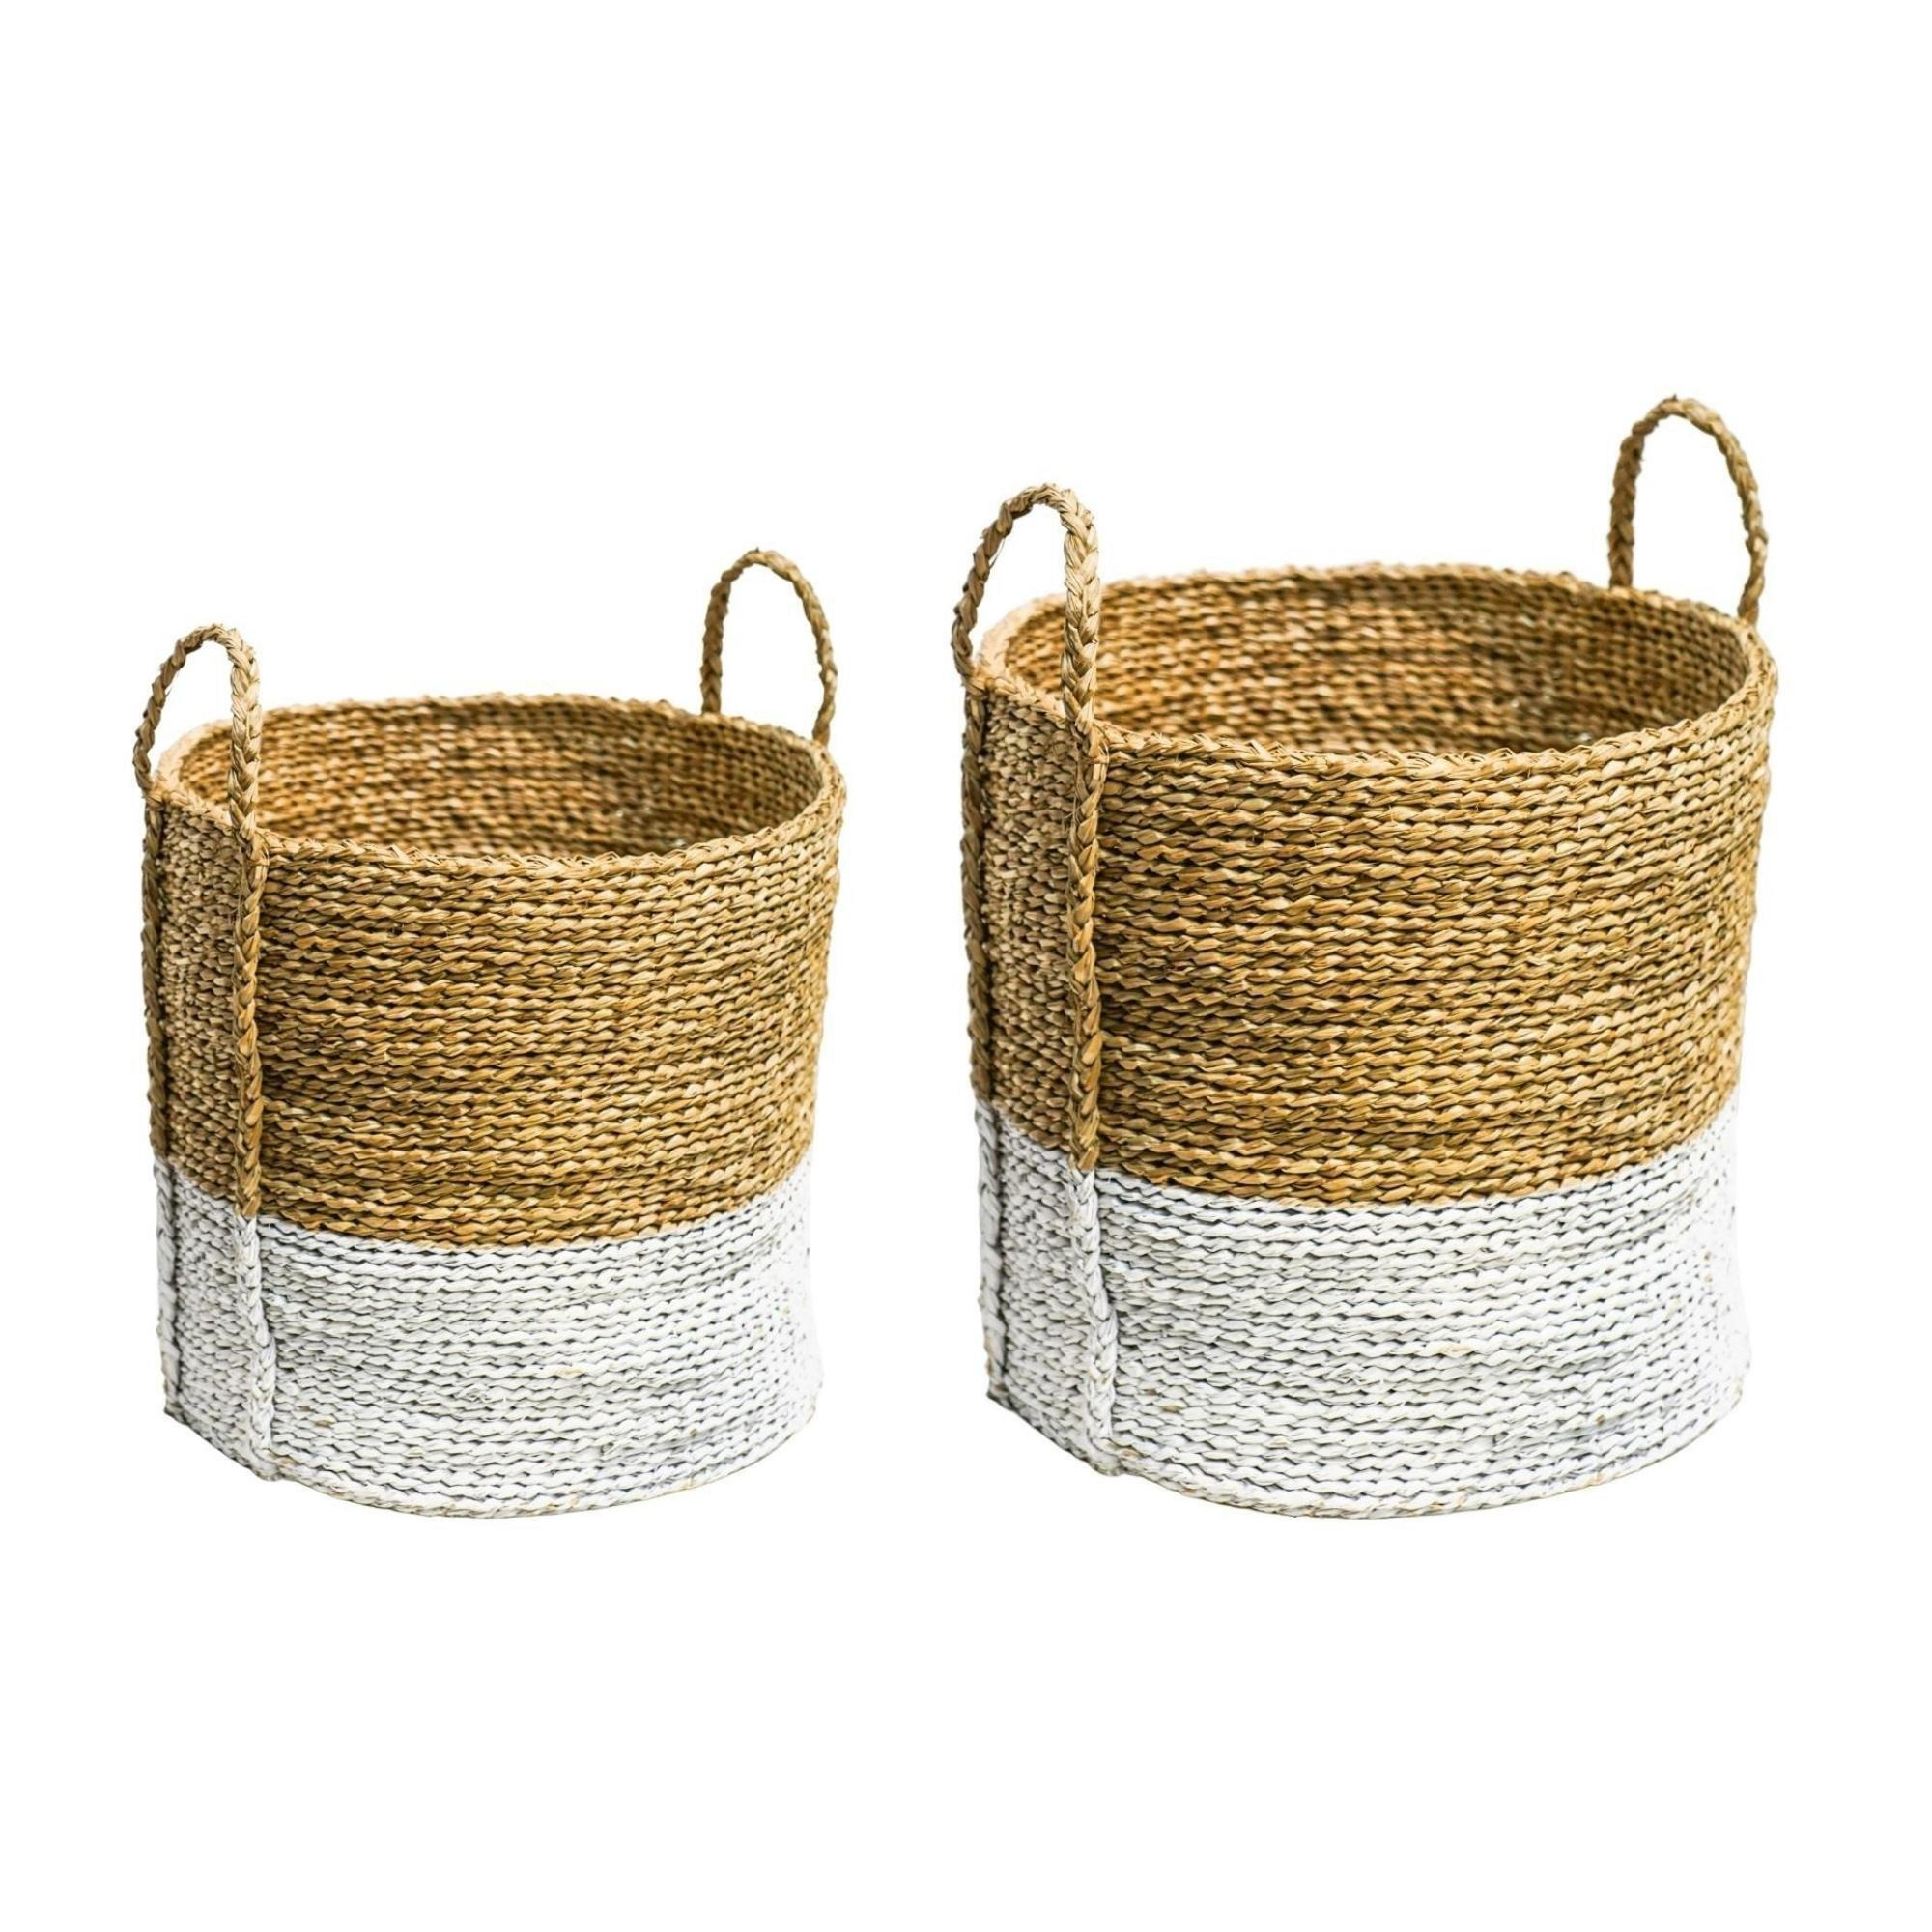 Seagrass Log & Kindling Basket, White, Set of 2 - image 1